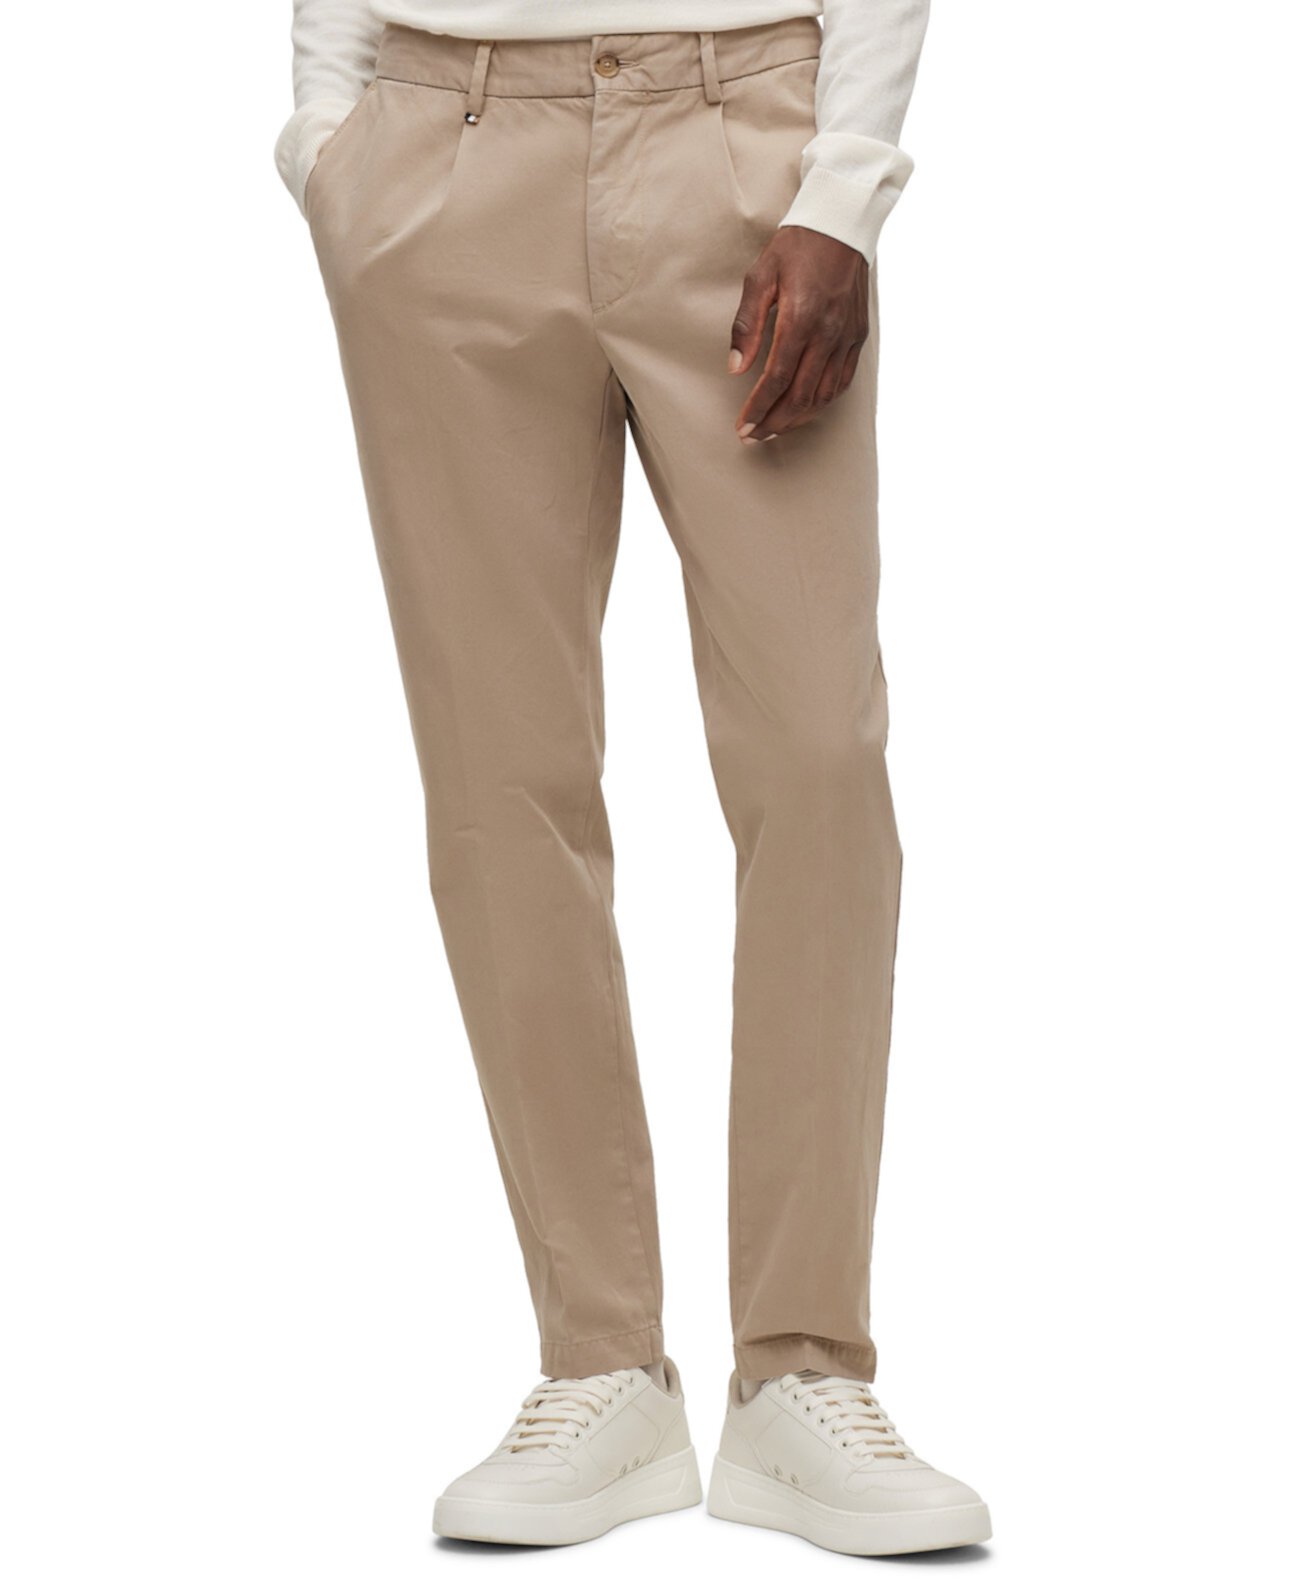 Мужские брюки со складками спереди BOSS